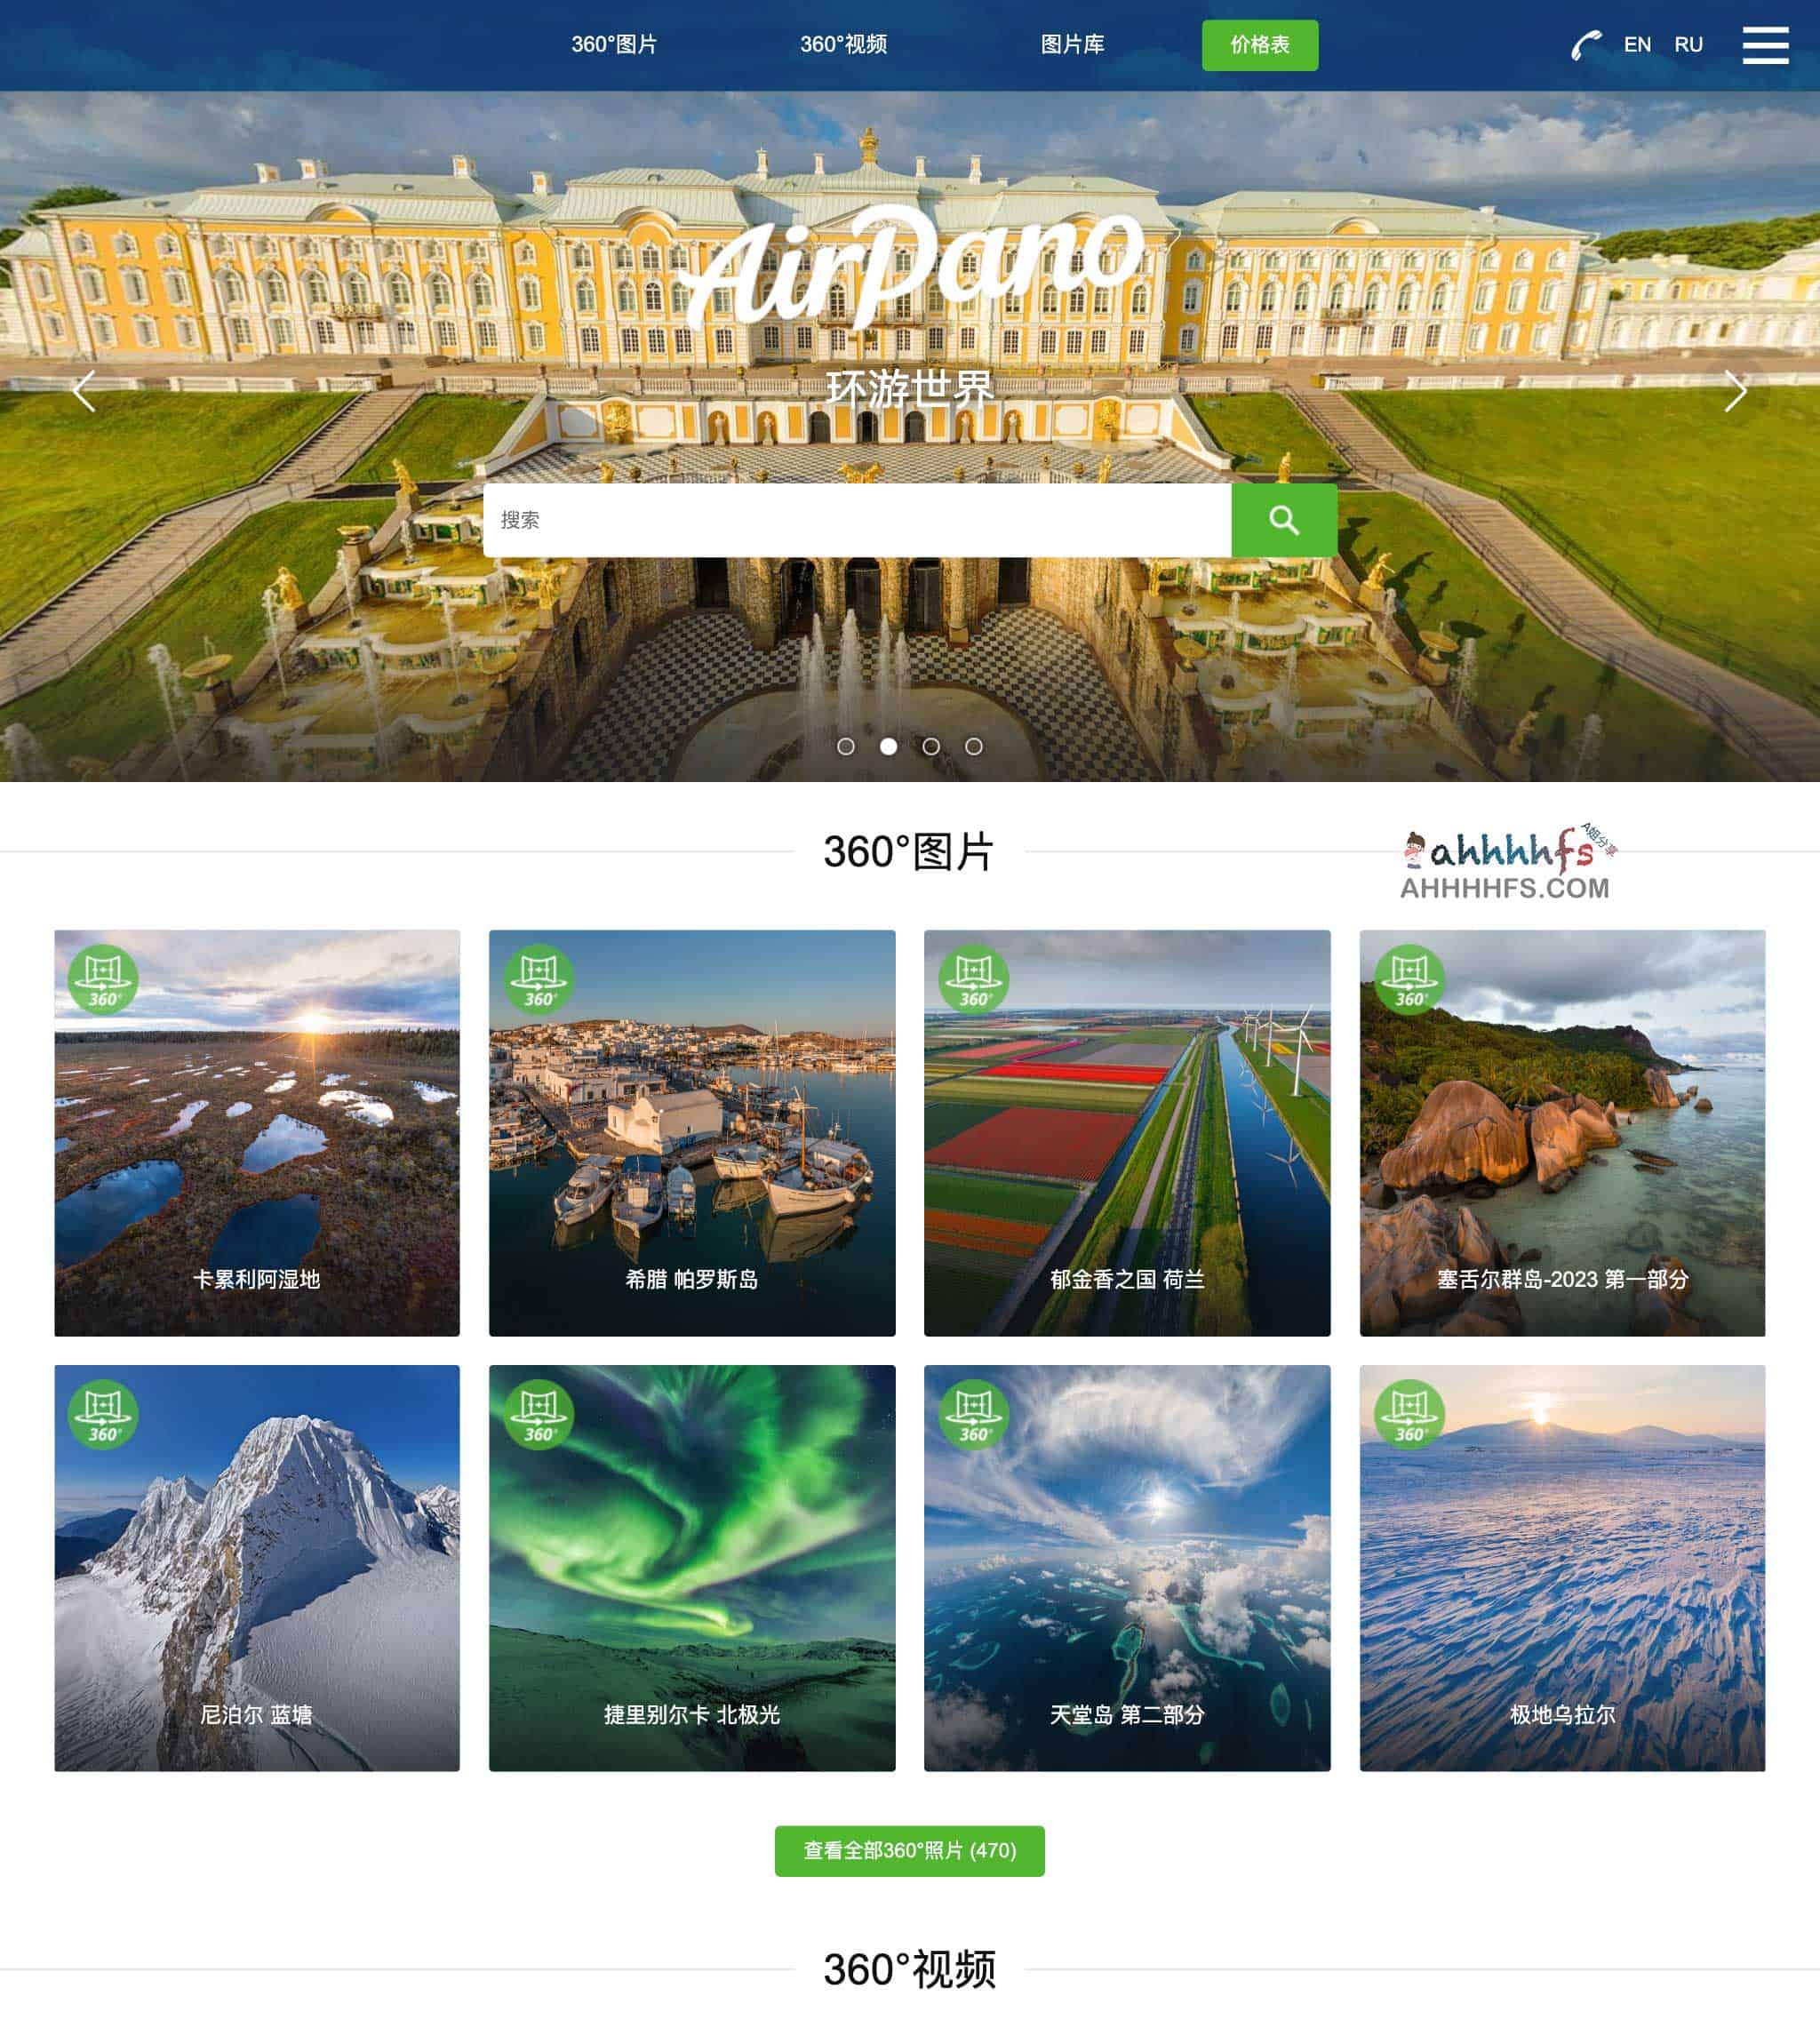 AirPano-全球360°全景视频和图片 在家环游世界